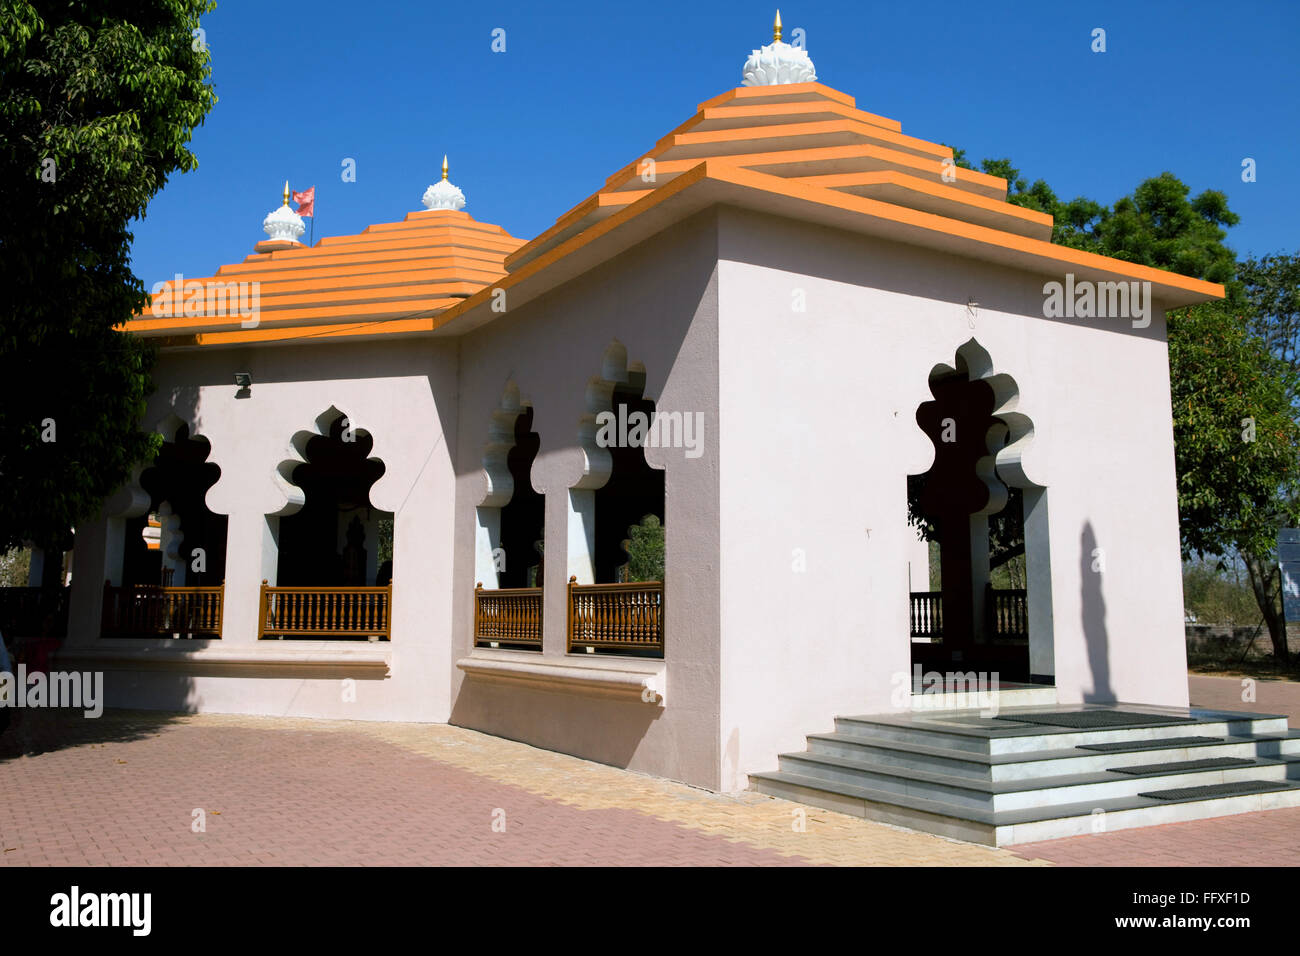 Lord venkateshwara temple someshwar nasik Maharashtra india Stock Photo